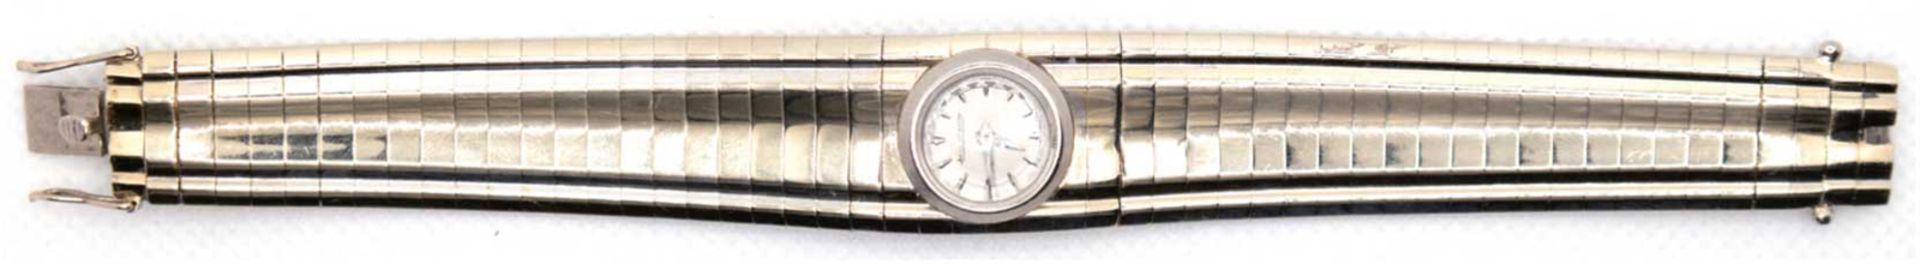 Damenuhr "Jaeger Lecoultre", 18 k WG, Handaufzug, Uhrwerk im Armband integriert, rundes Zifferblatt